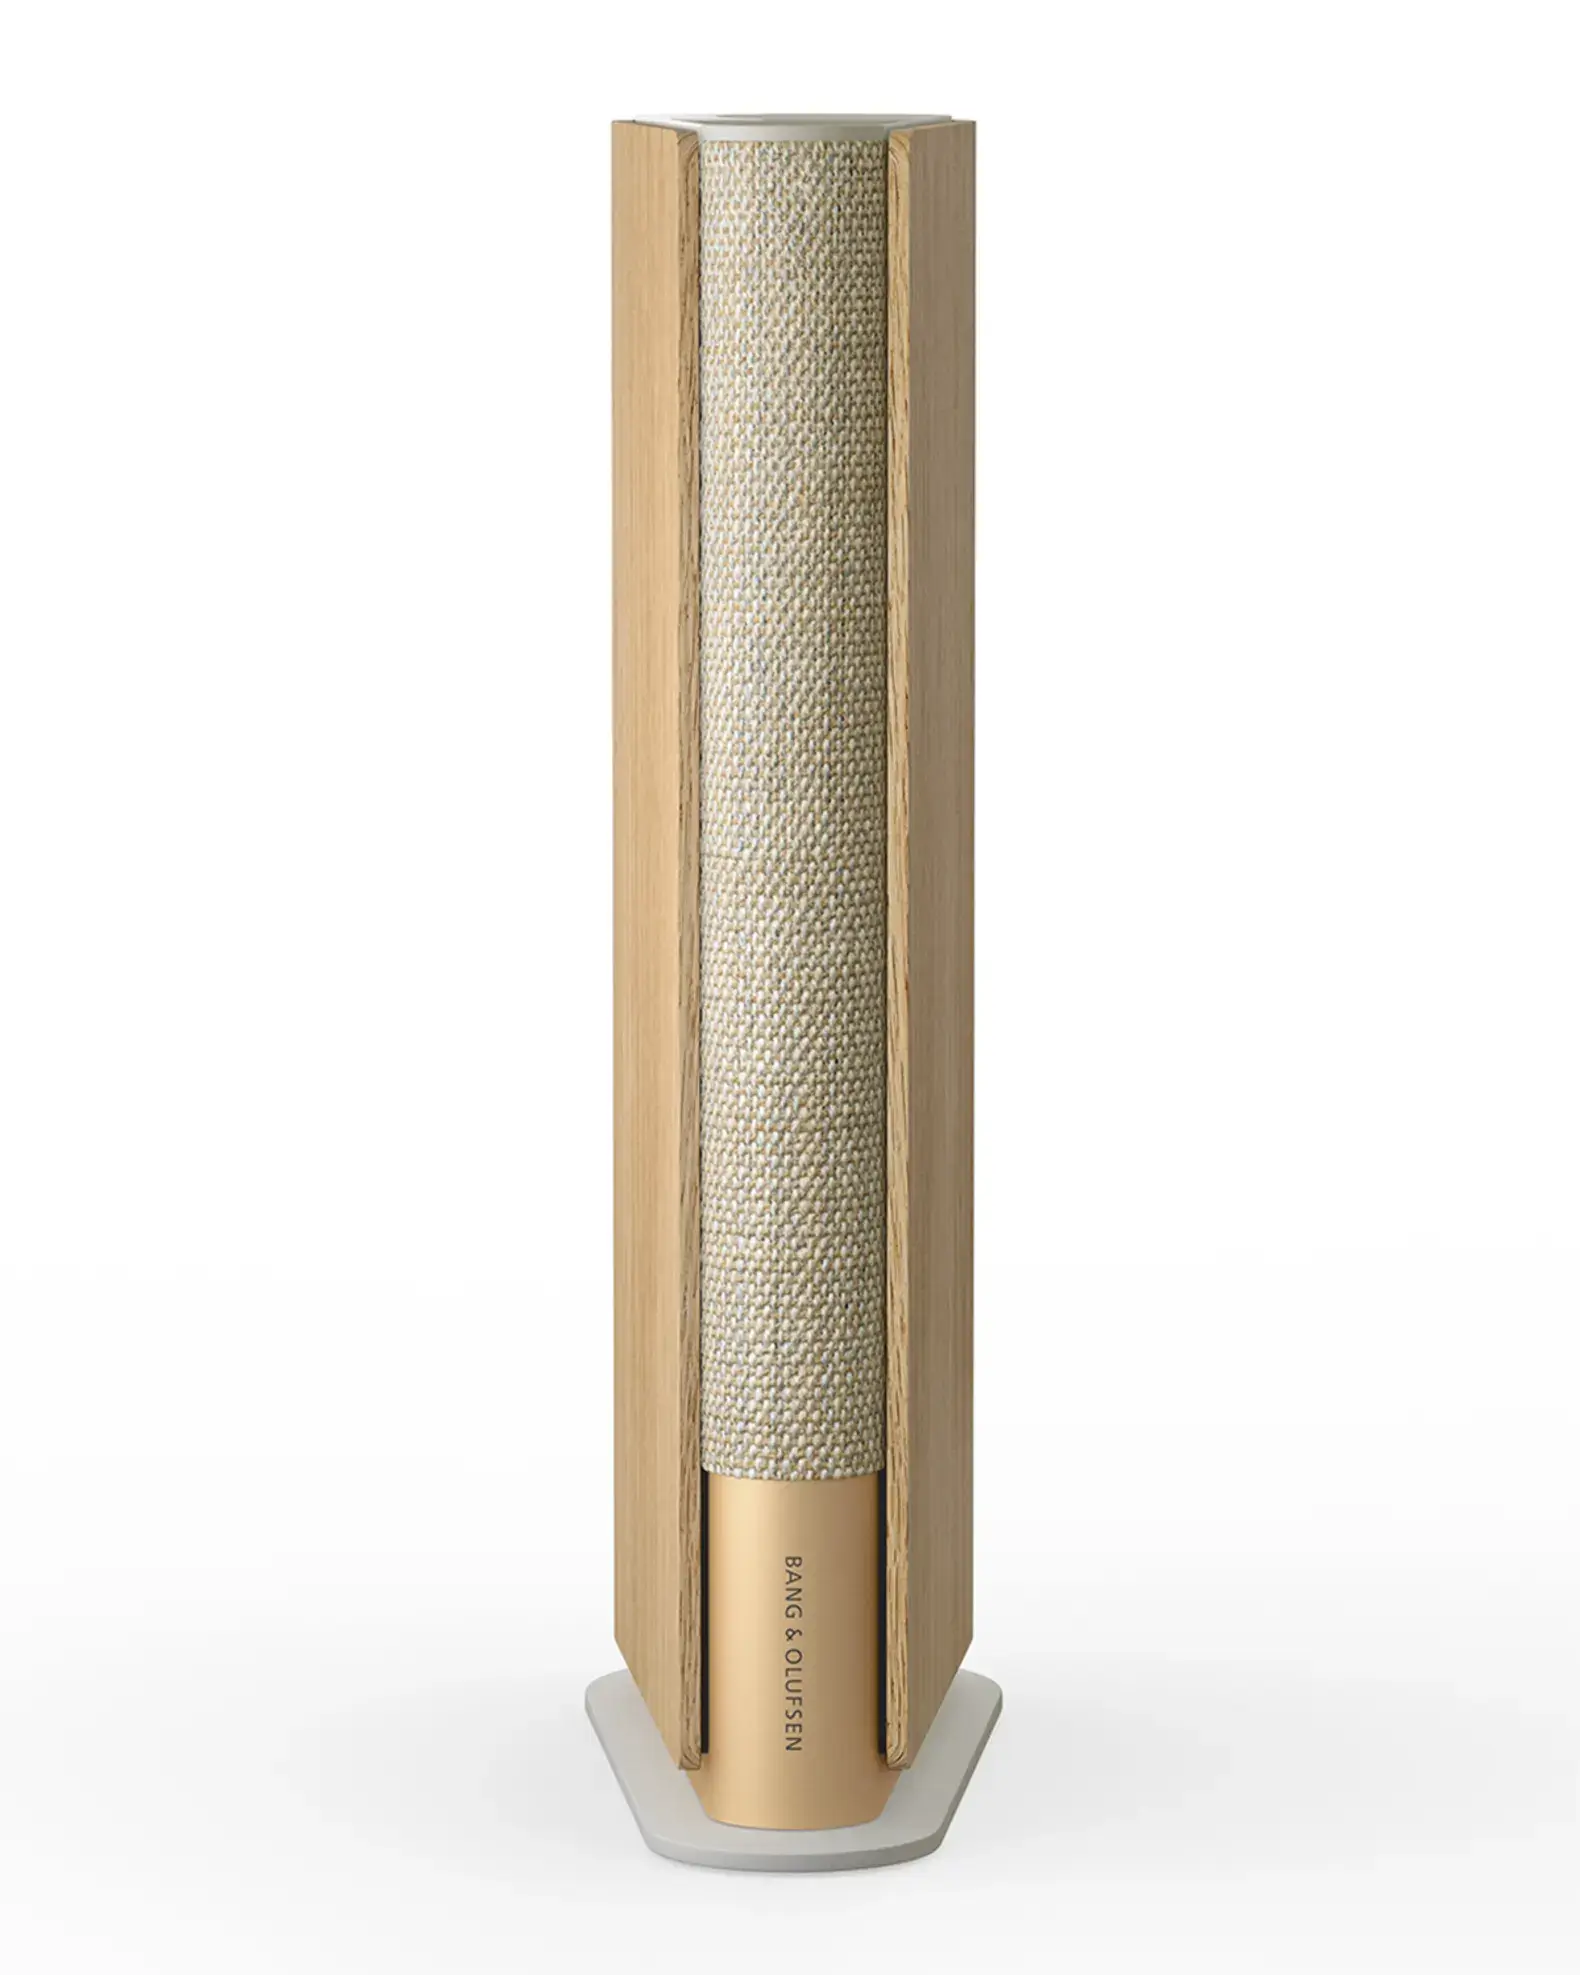 Modern floor-standing speaker with wooden side panels and metallic mesh front.